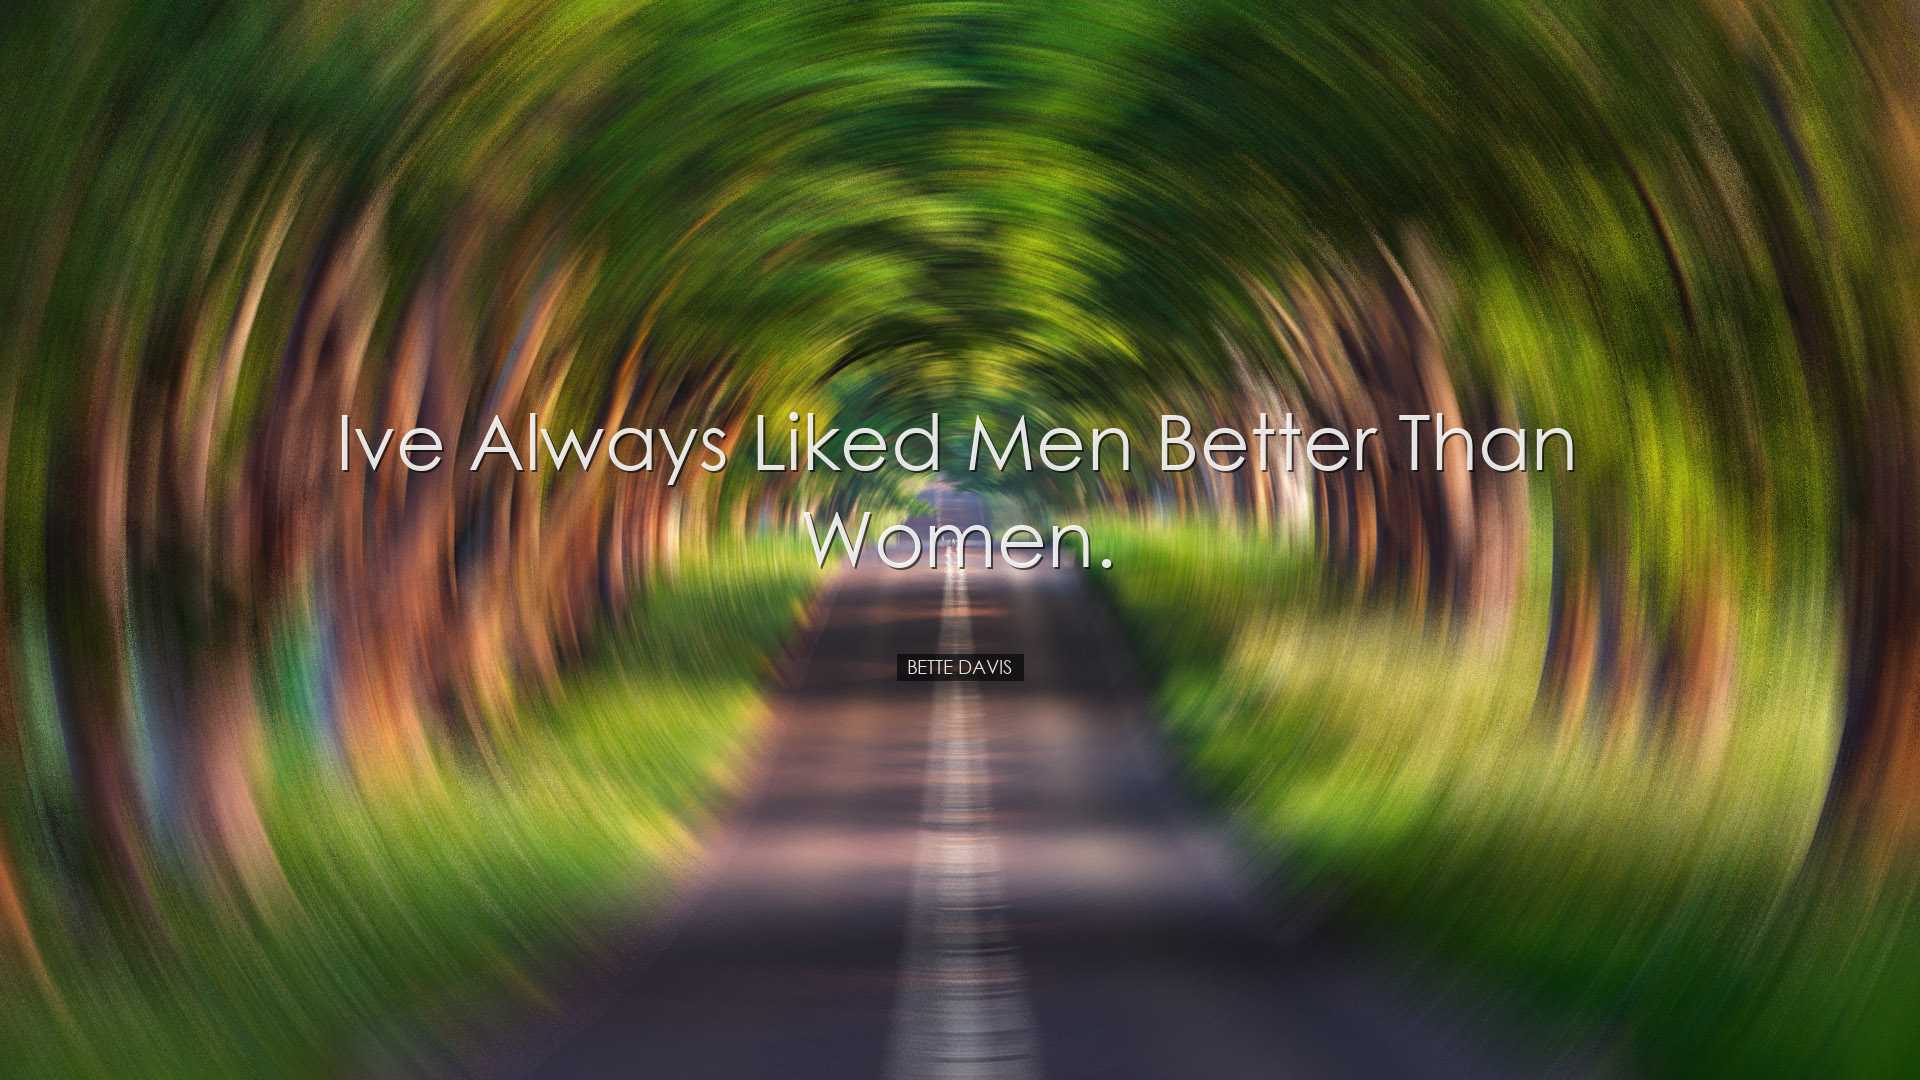 Ive always liked men better than women. - Bette Davis